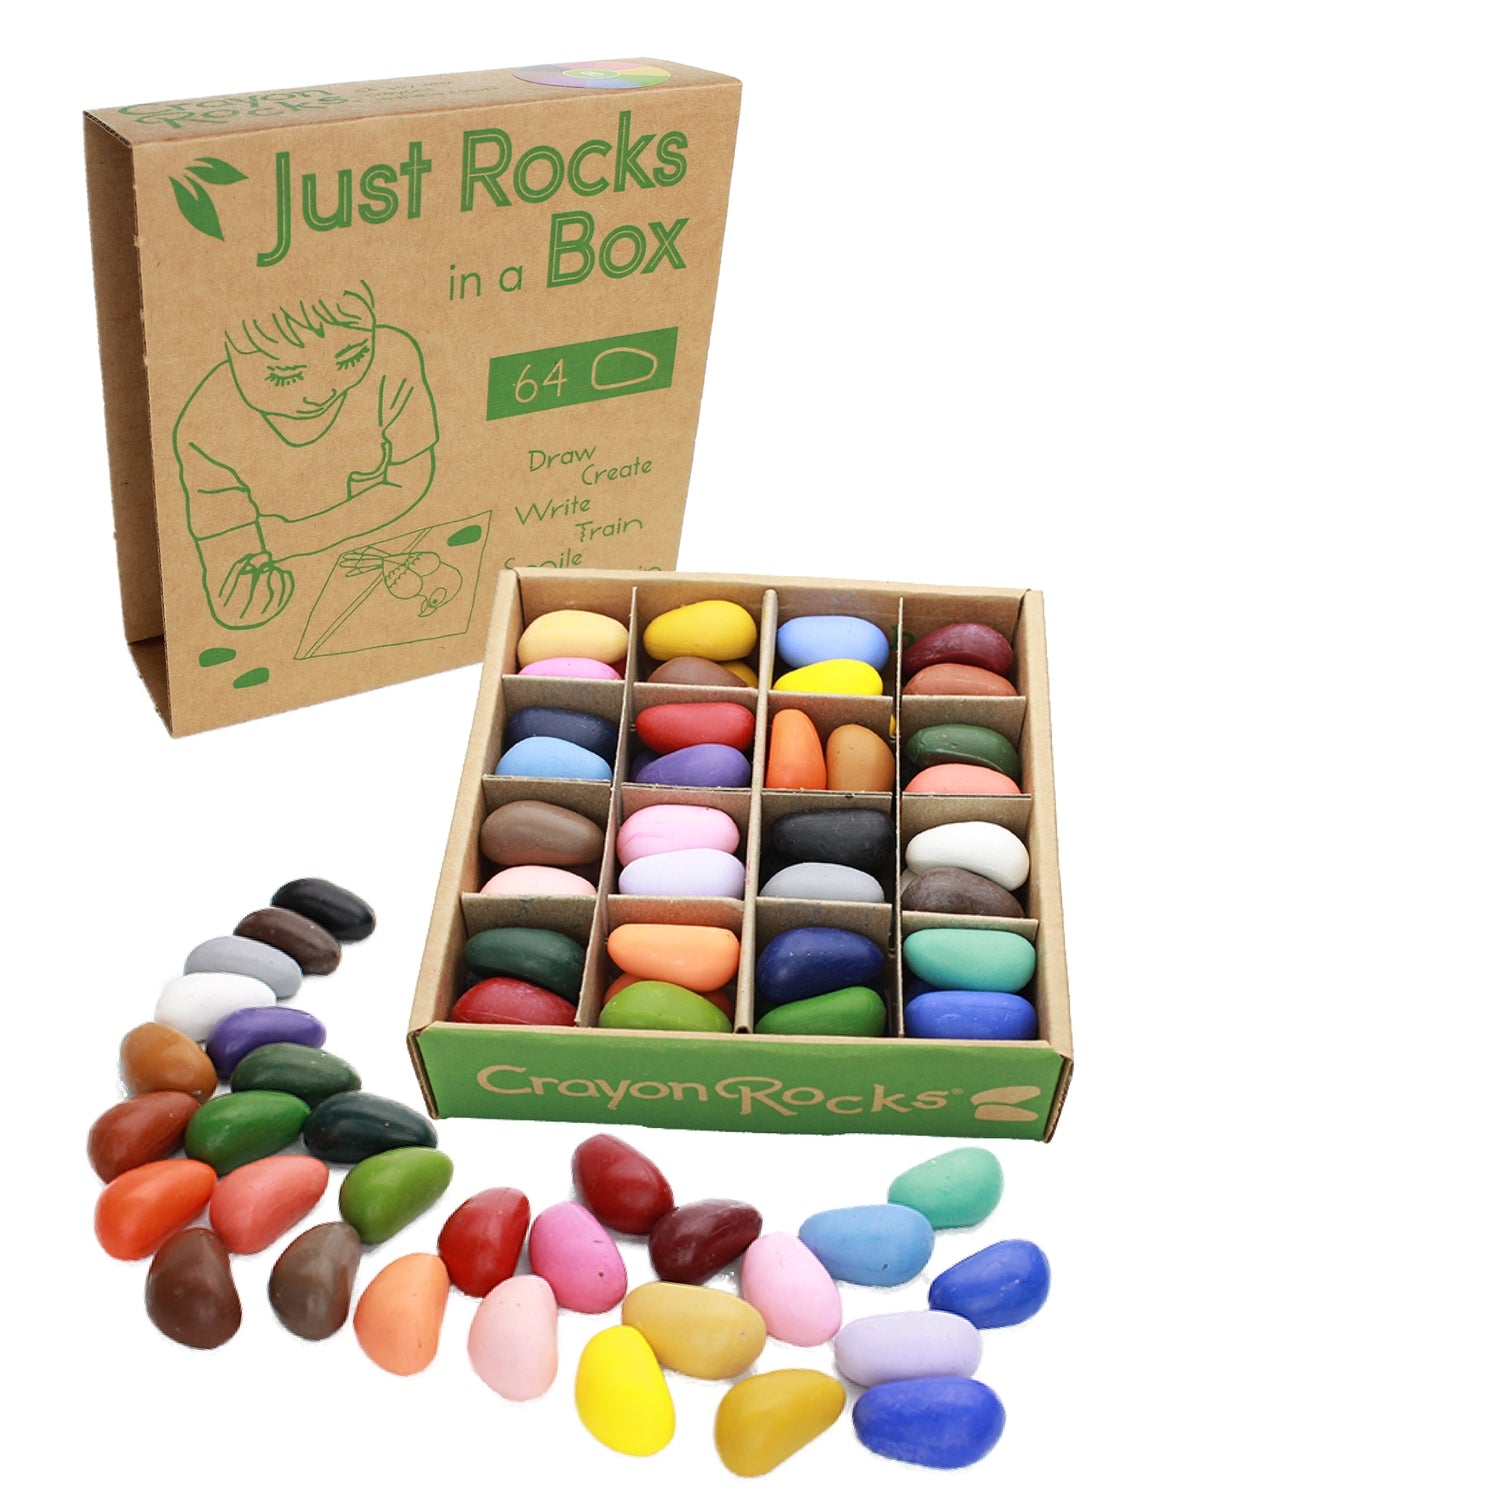 JRB 32 Just Rocks in A Box - 32 Colors / 64 Crayons